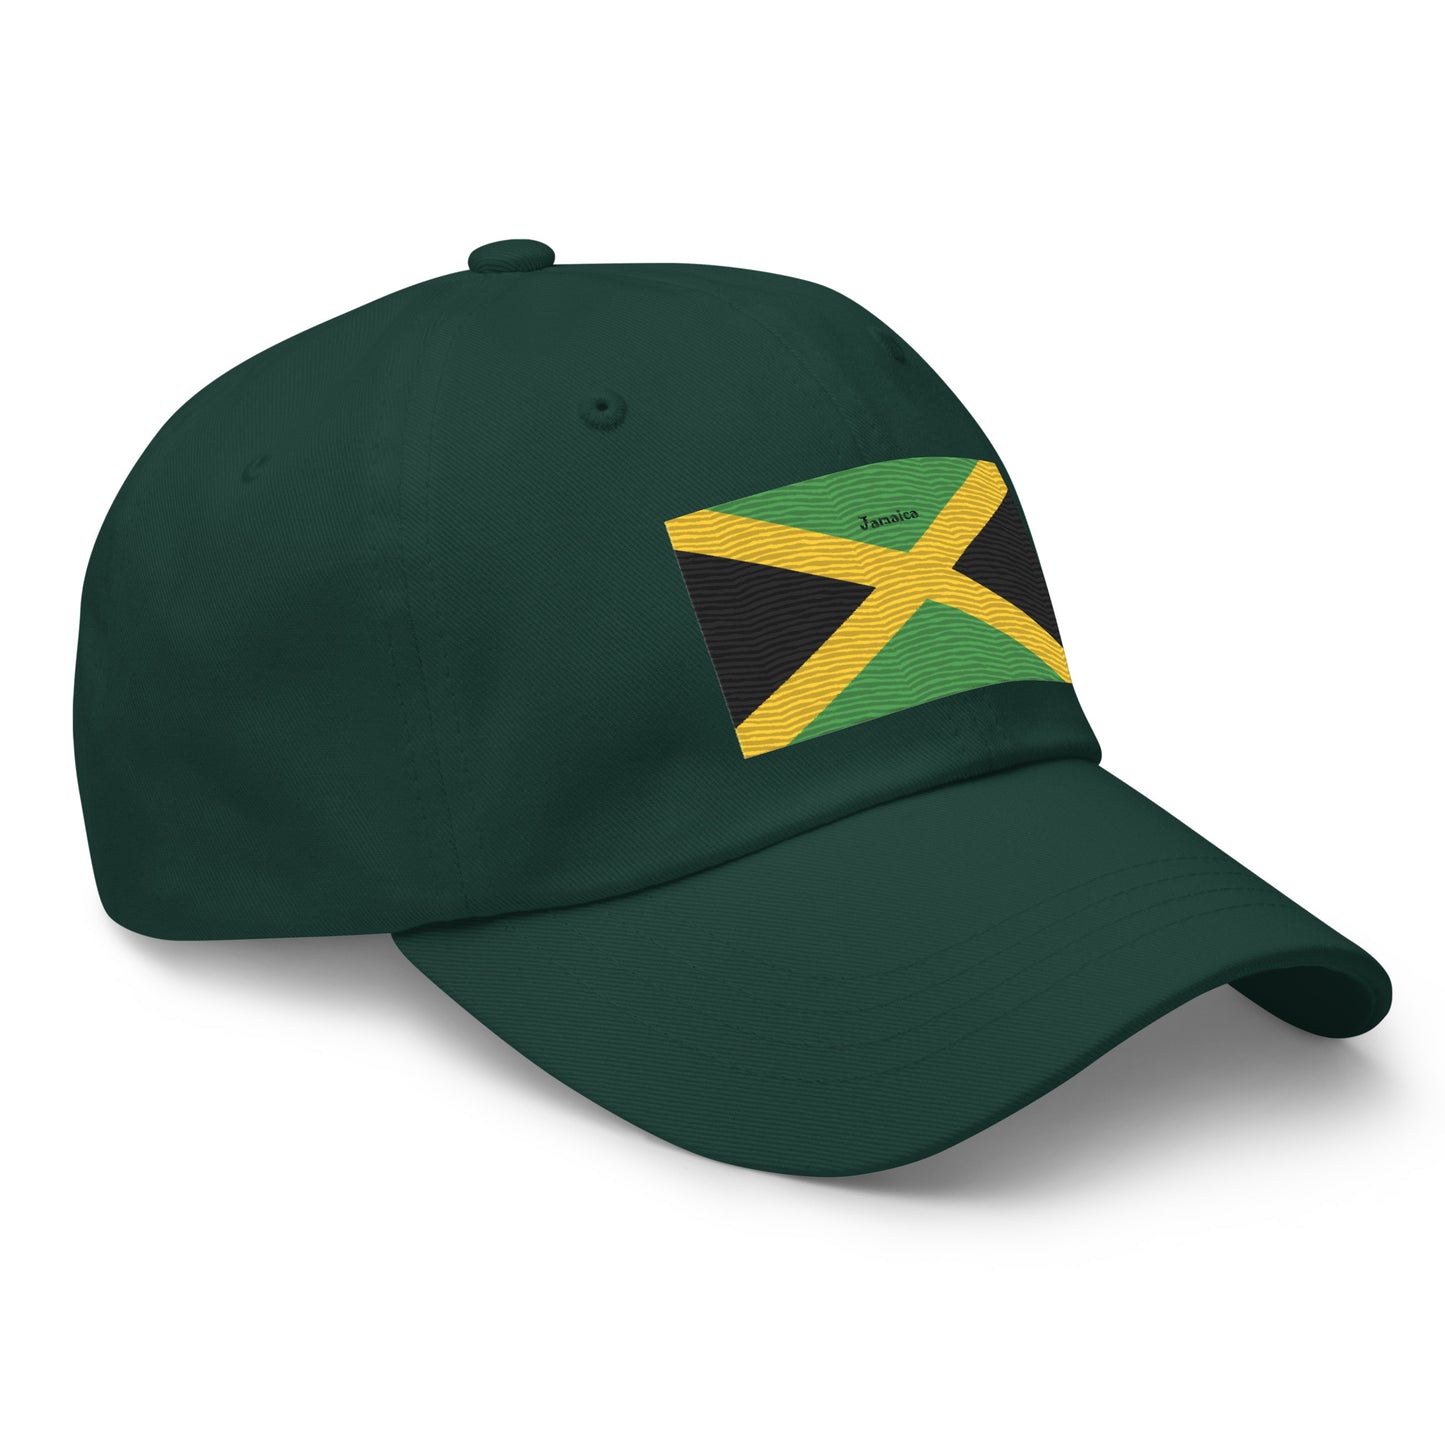 Comfortable green dad hat celebrating Jamaican heritage